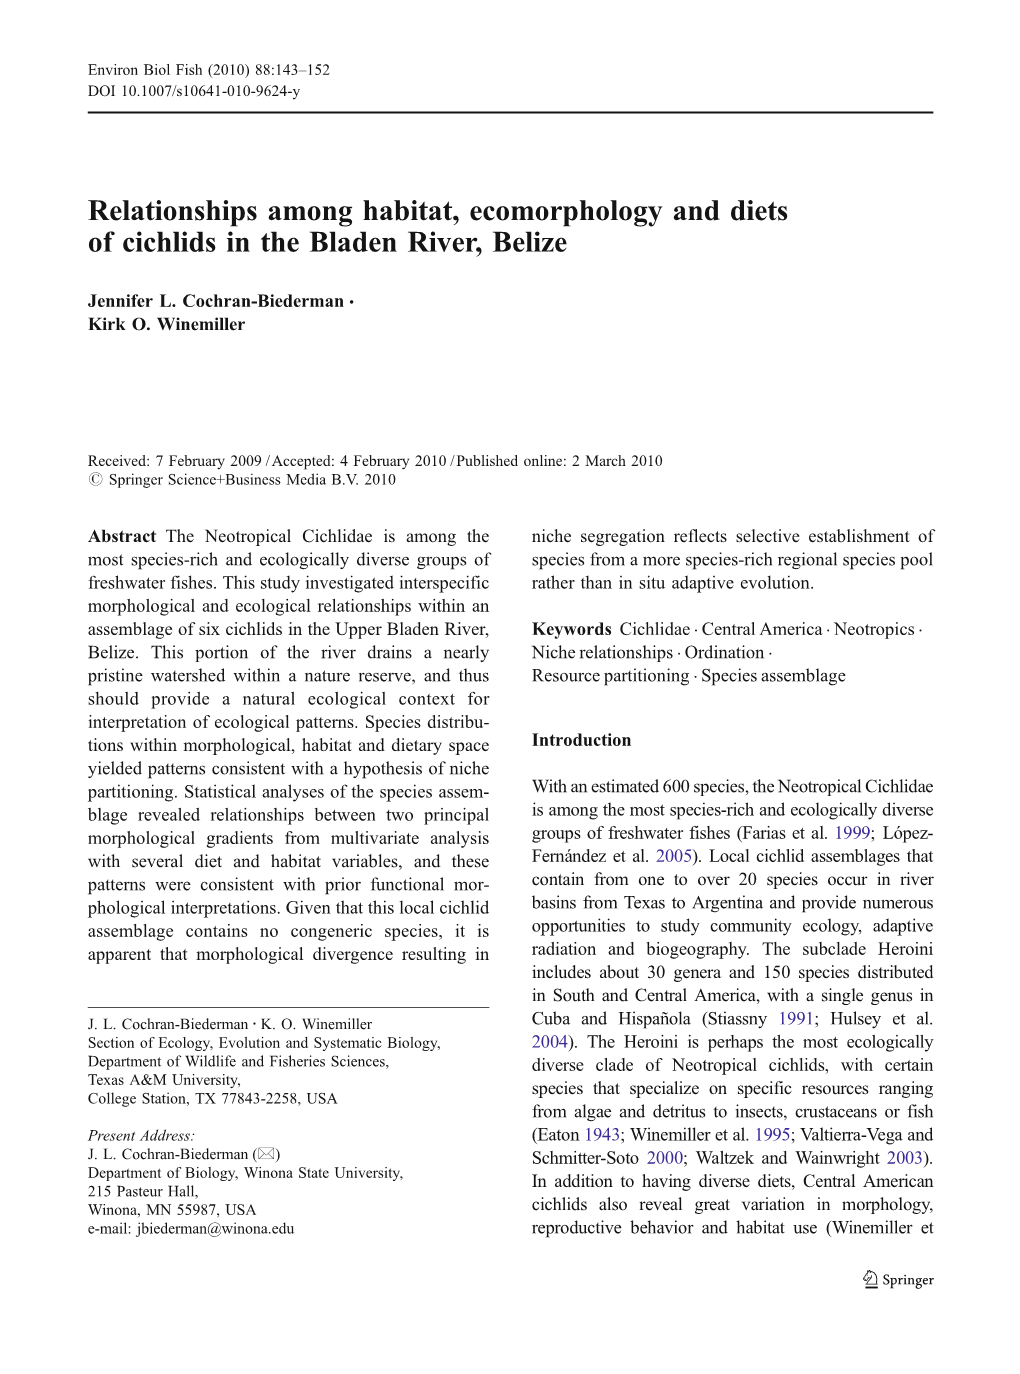 Relationships Among Habitat, Ecomorphology and Diets of Cichlids in the Bladen River, Belize